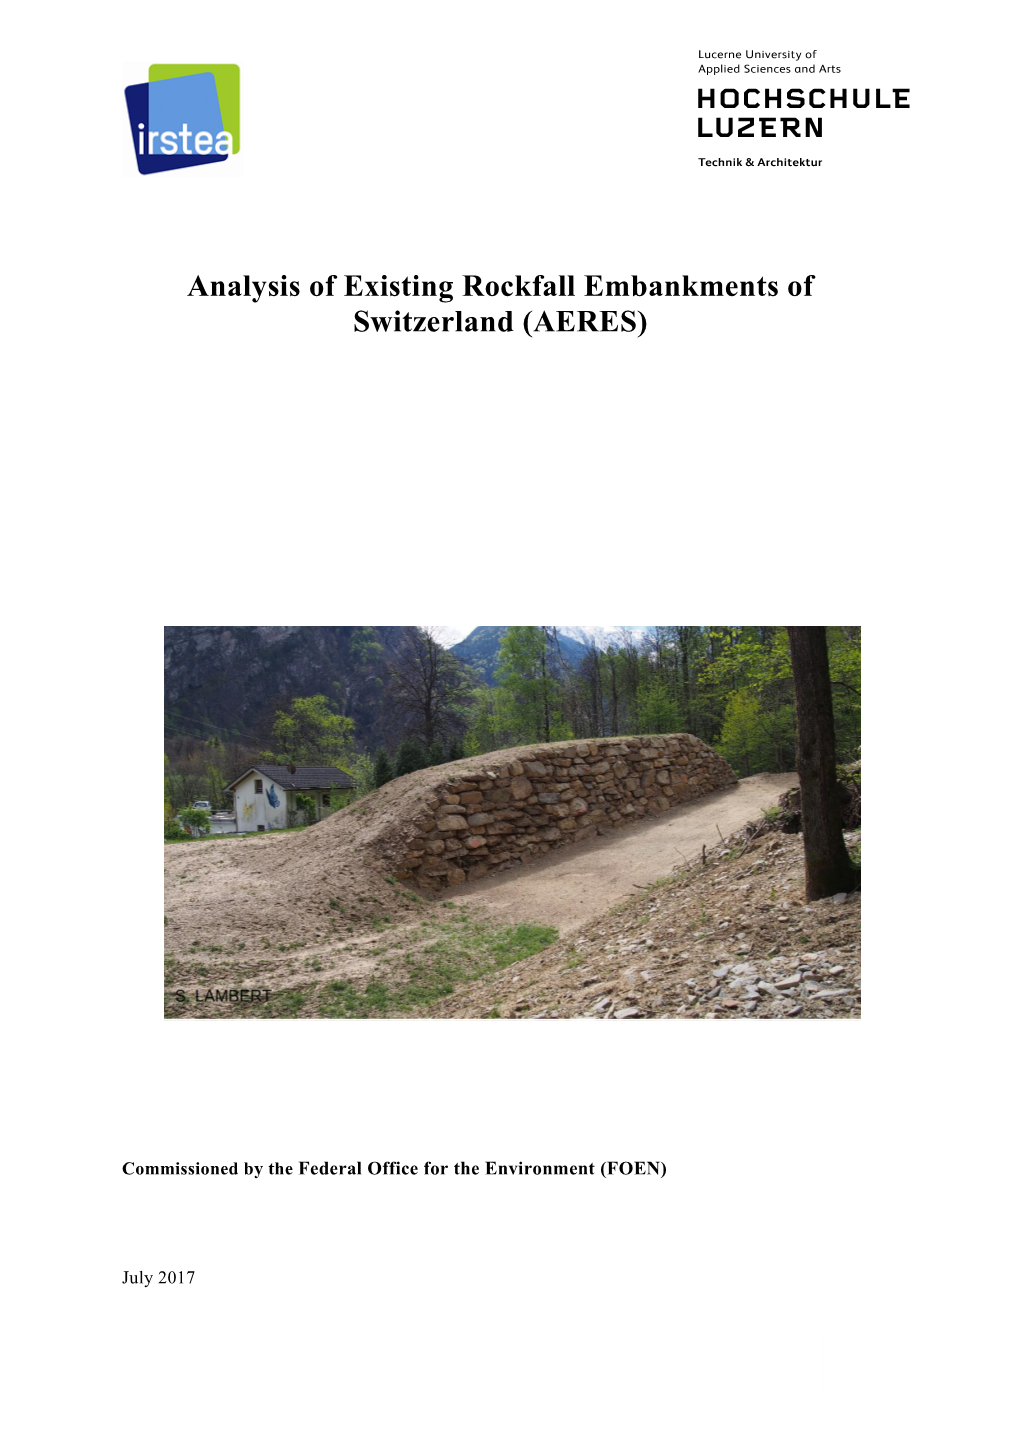 Analysis of Existing Rockfall Embankments of Switzerland (AERES)